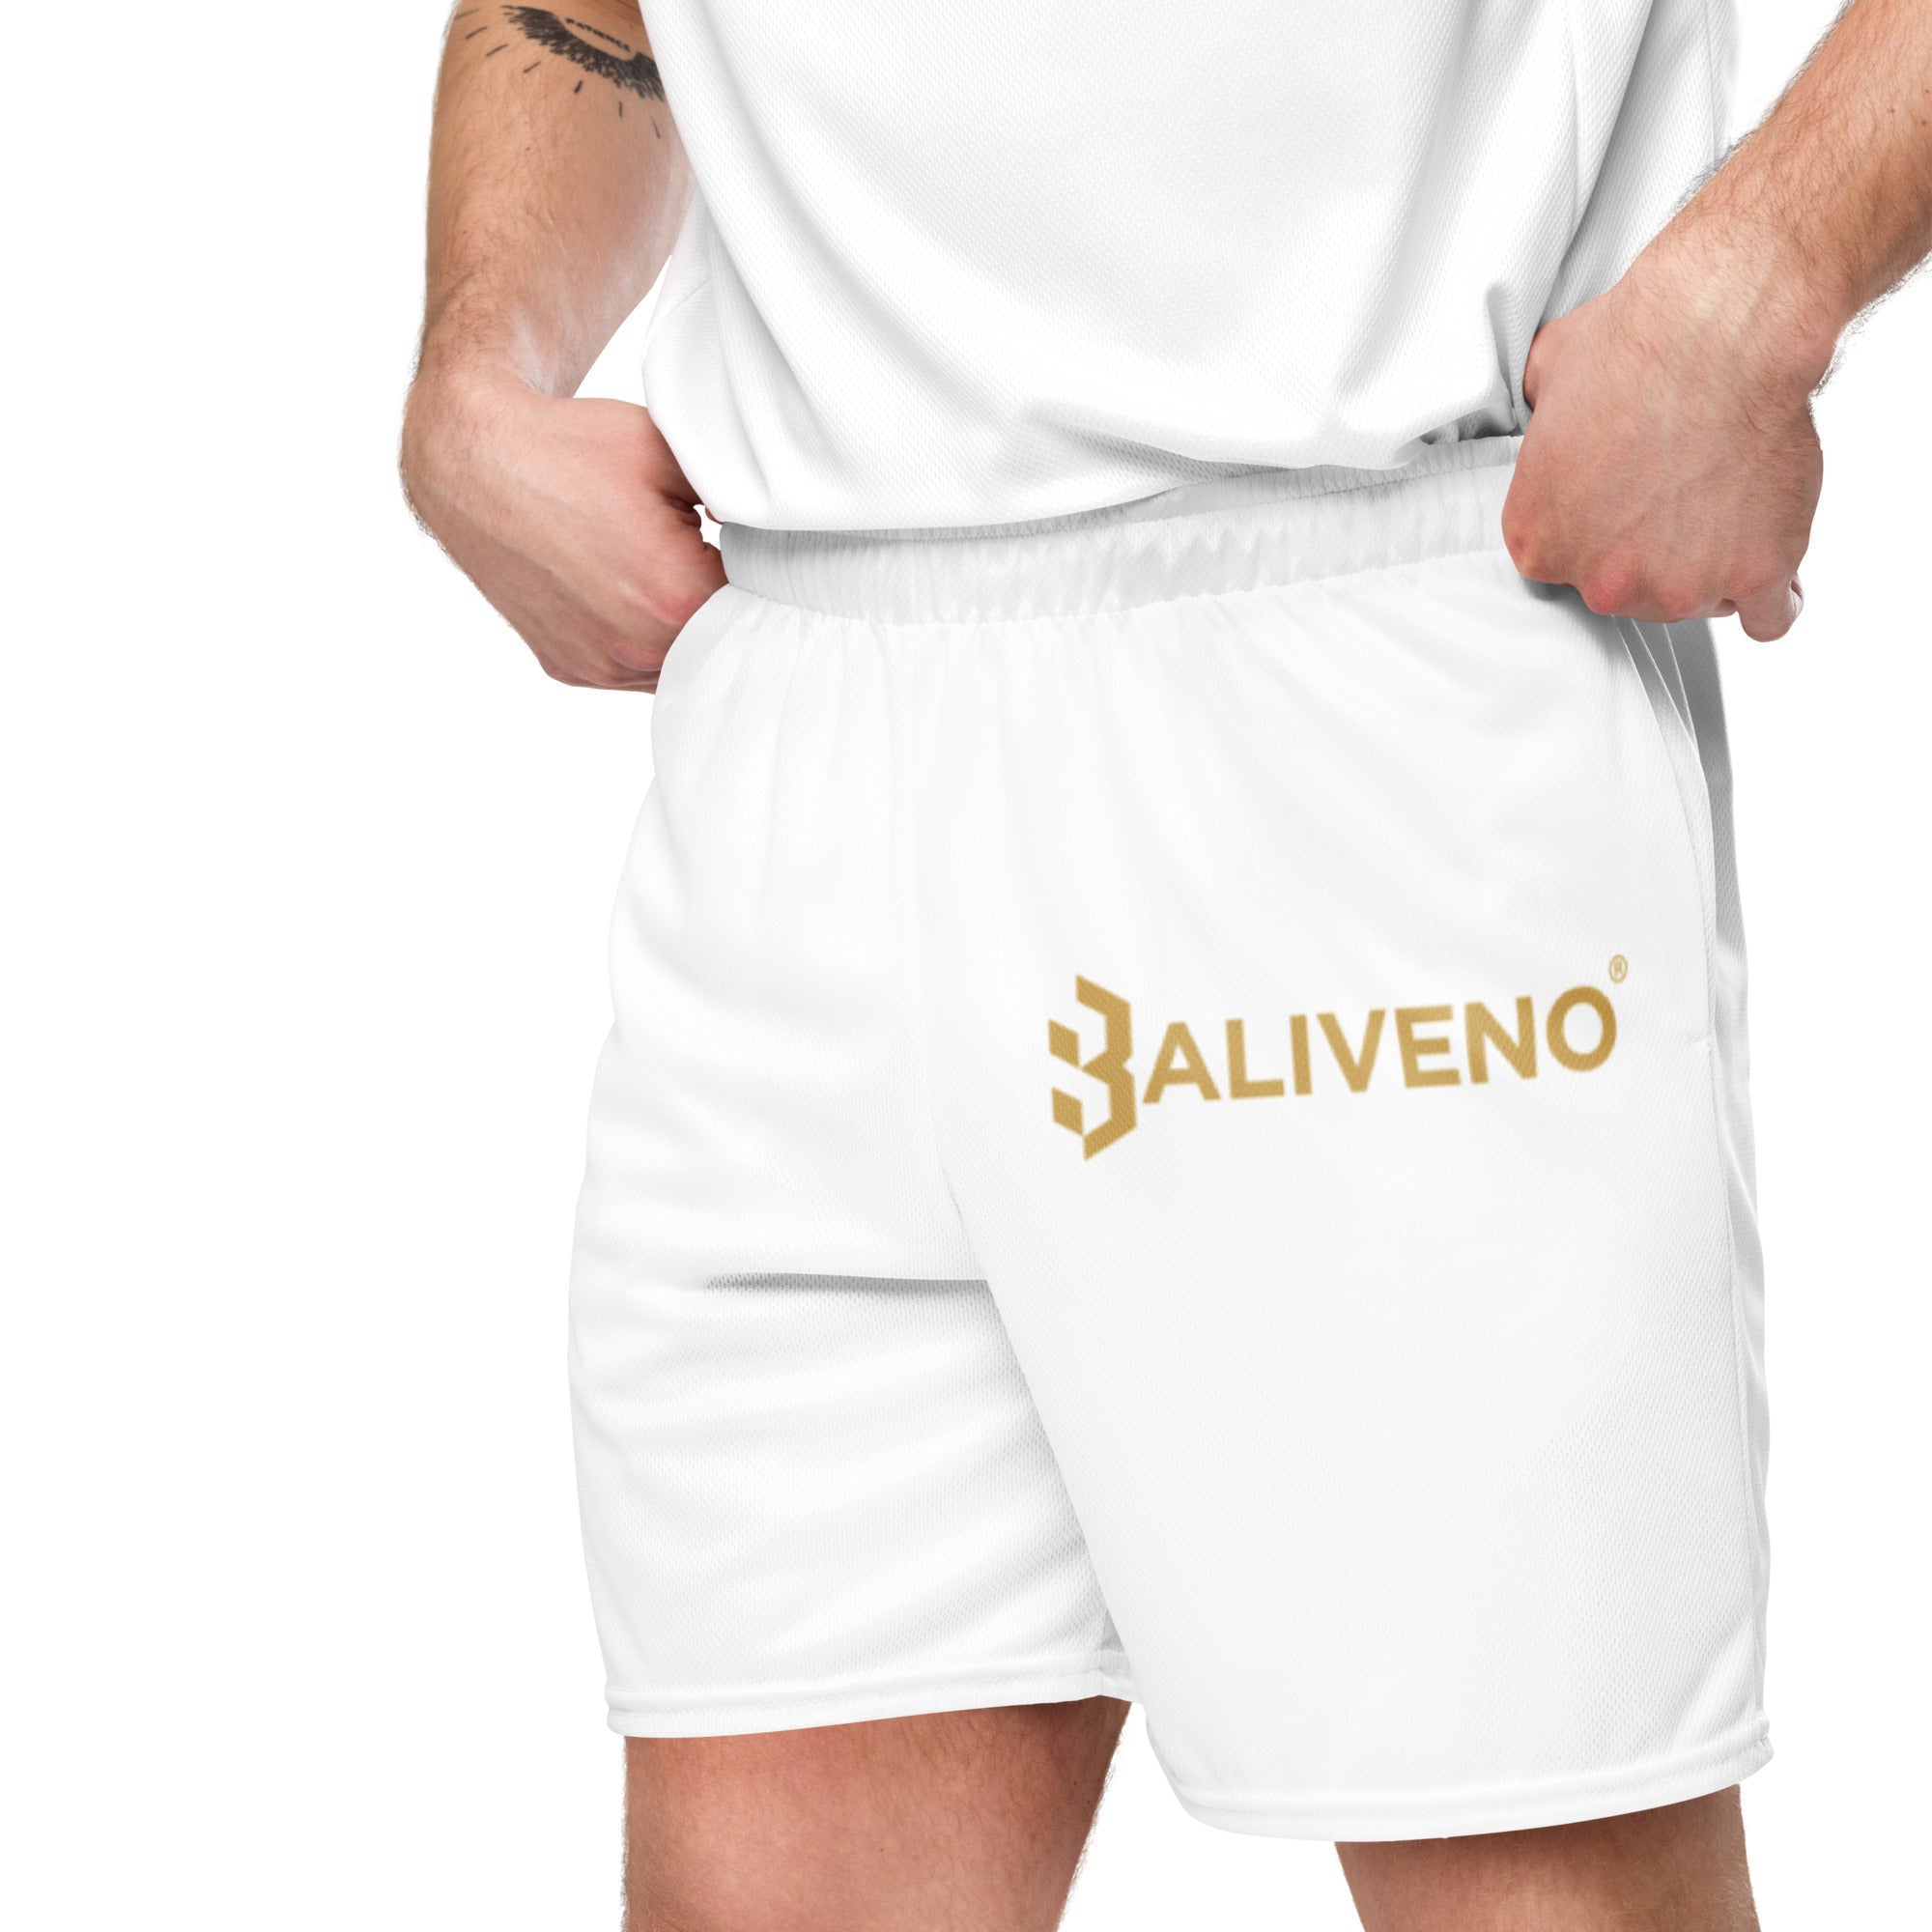 Unisex mesh shorts - BALIVENO